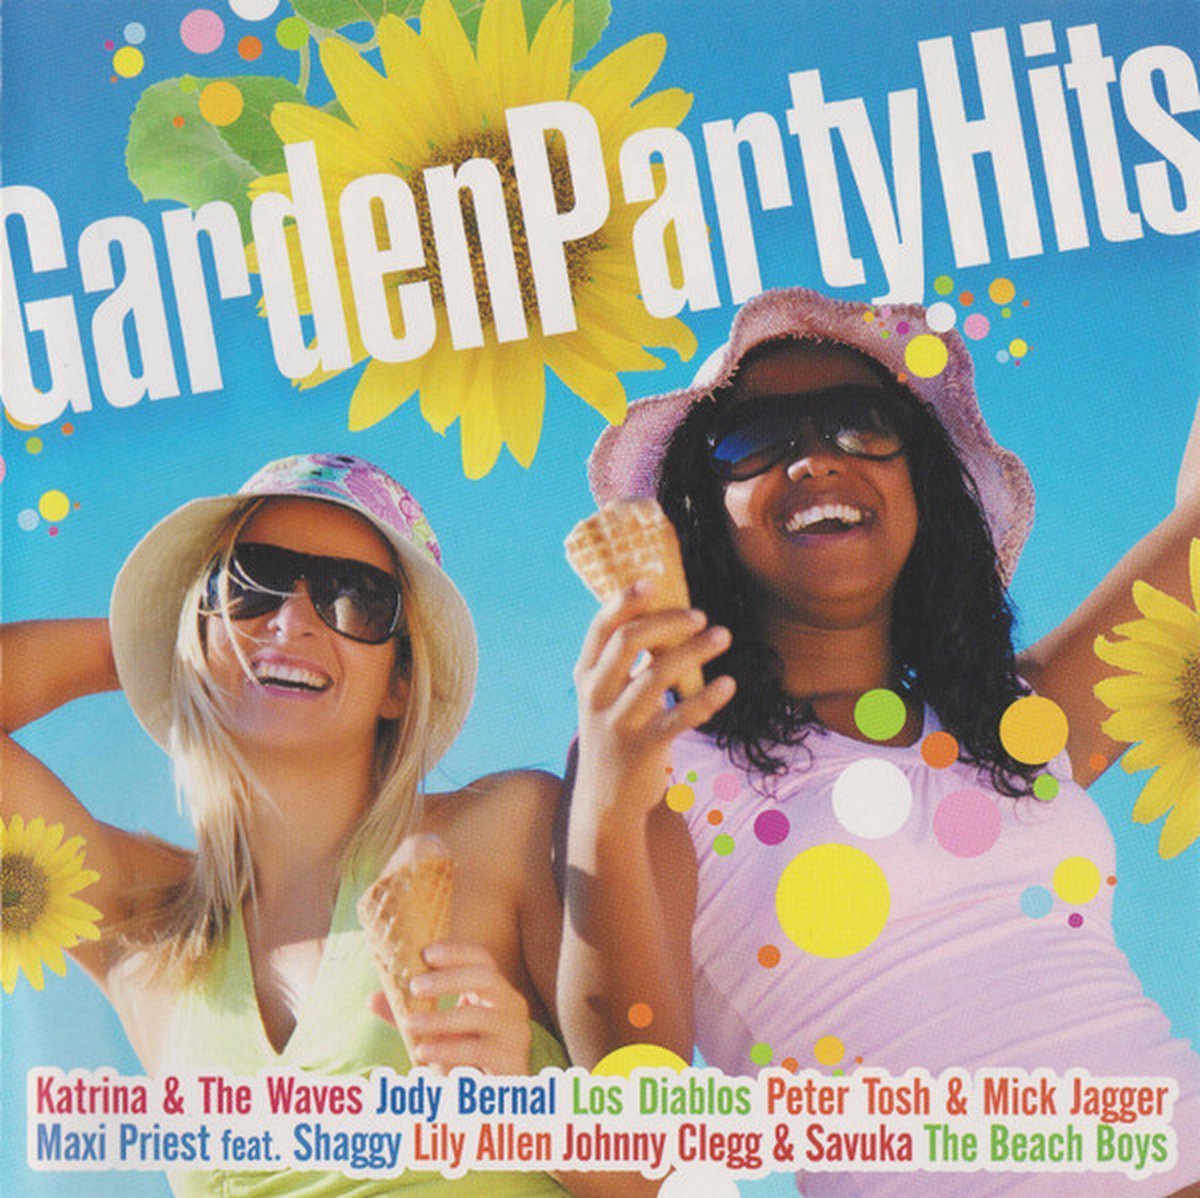 Garden Partyhits - de mooiste zomerhits allertijden - Cd Album - Laid Back, Imca Marina, Mink Deville, Beach Boys, Blondie, Maxi Priest, Peter Tosh - Onbekend